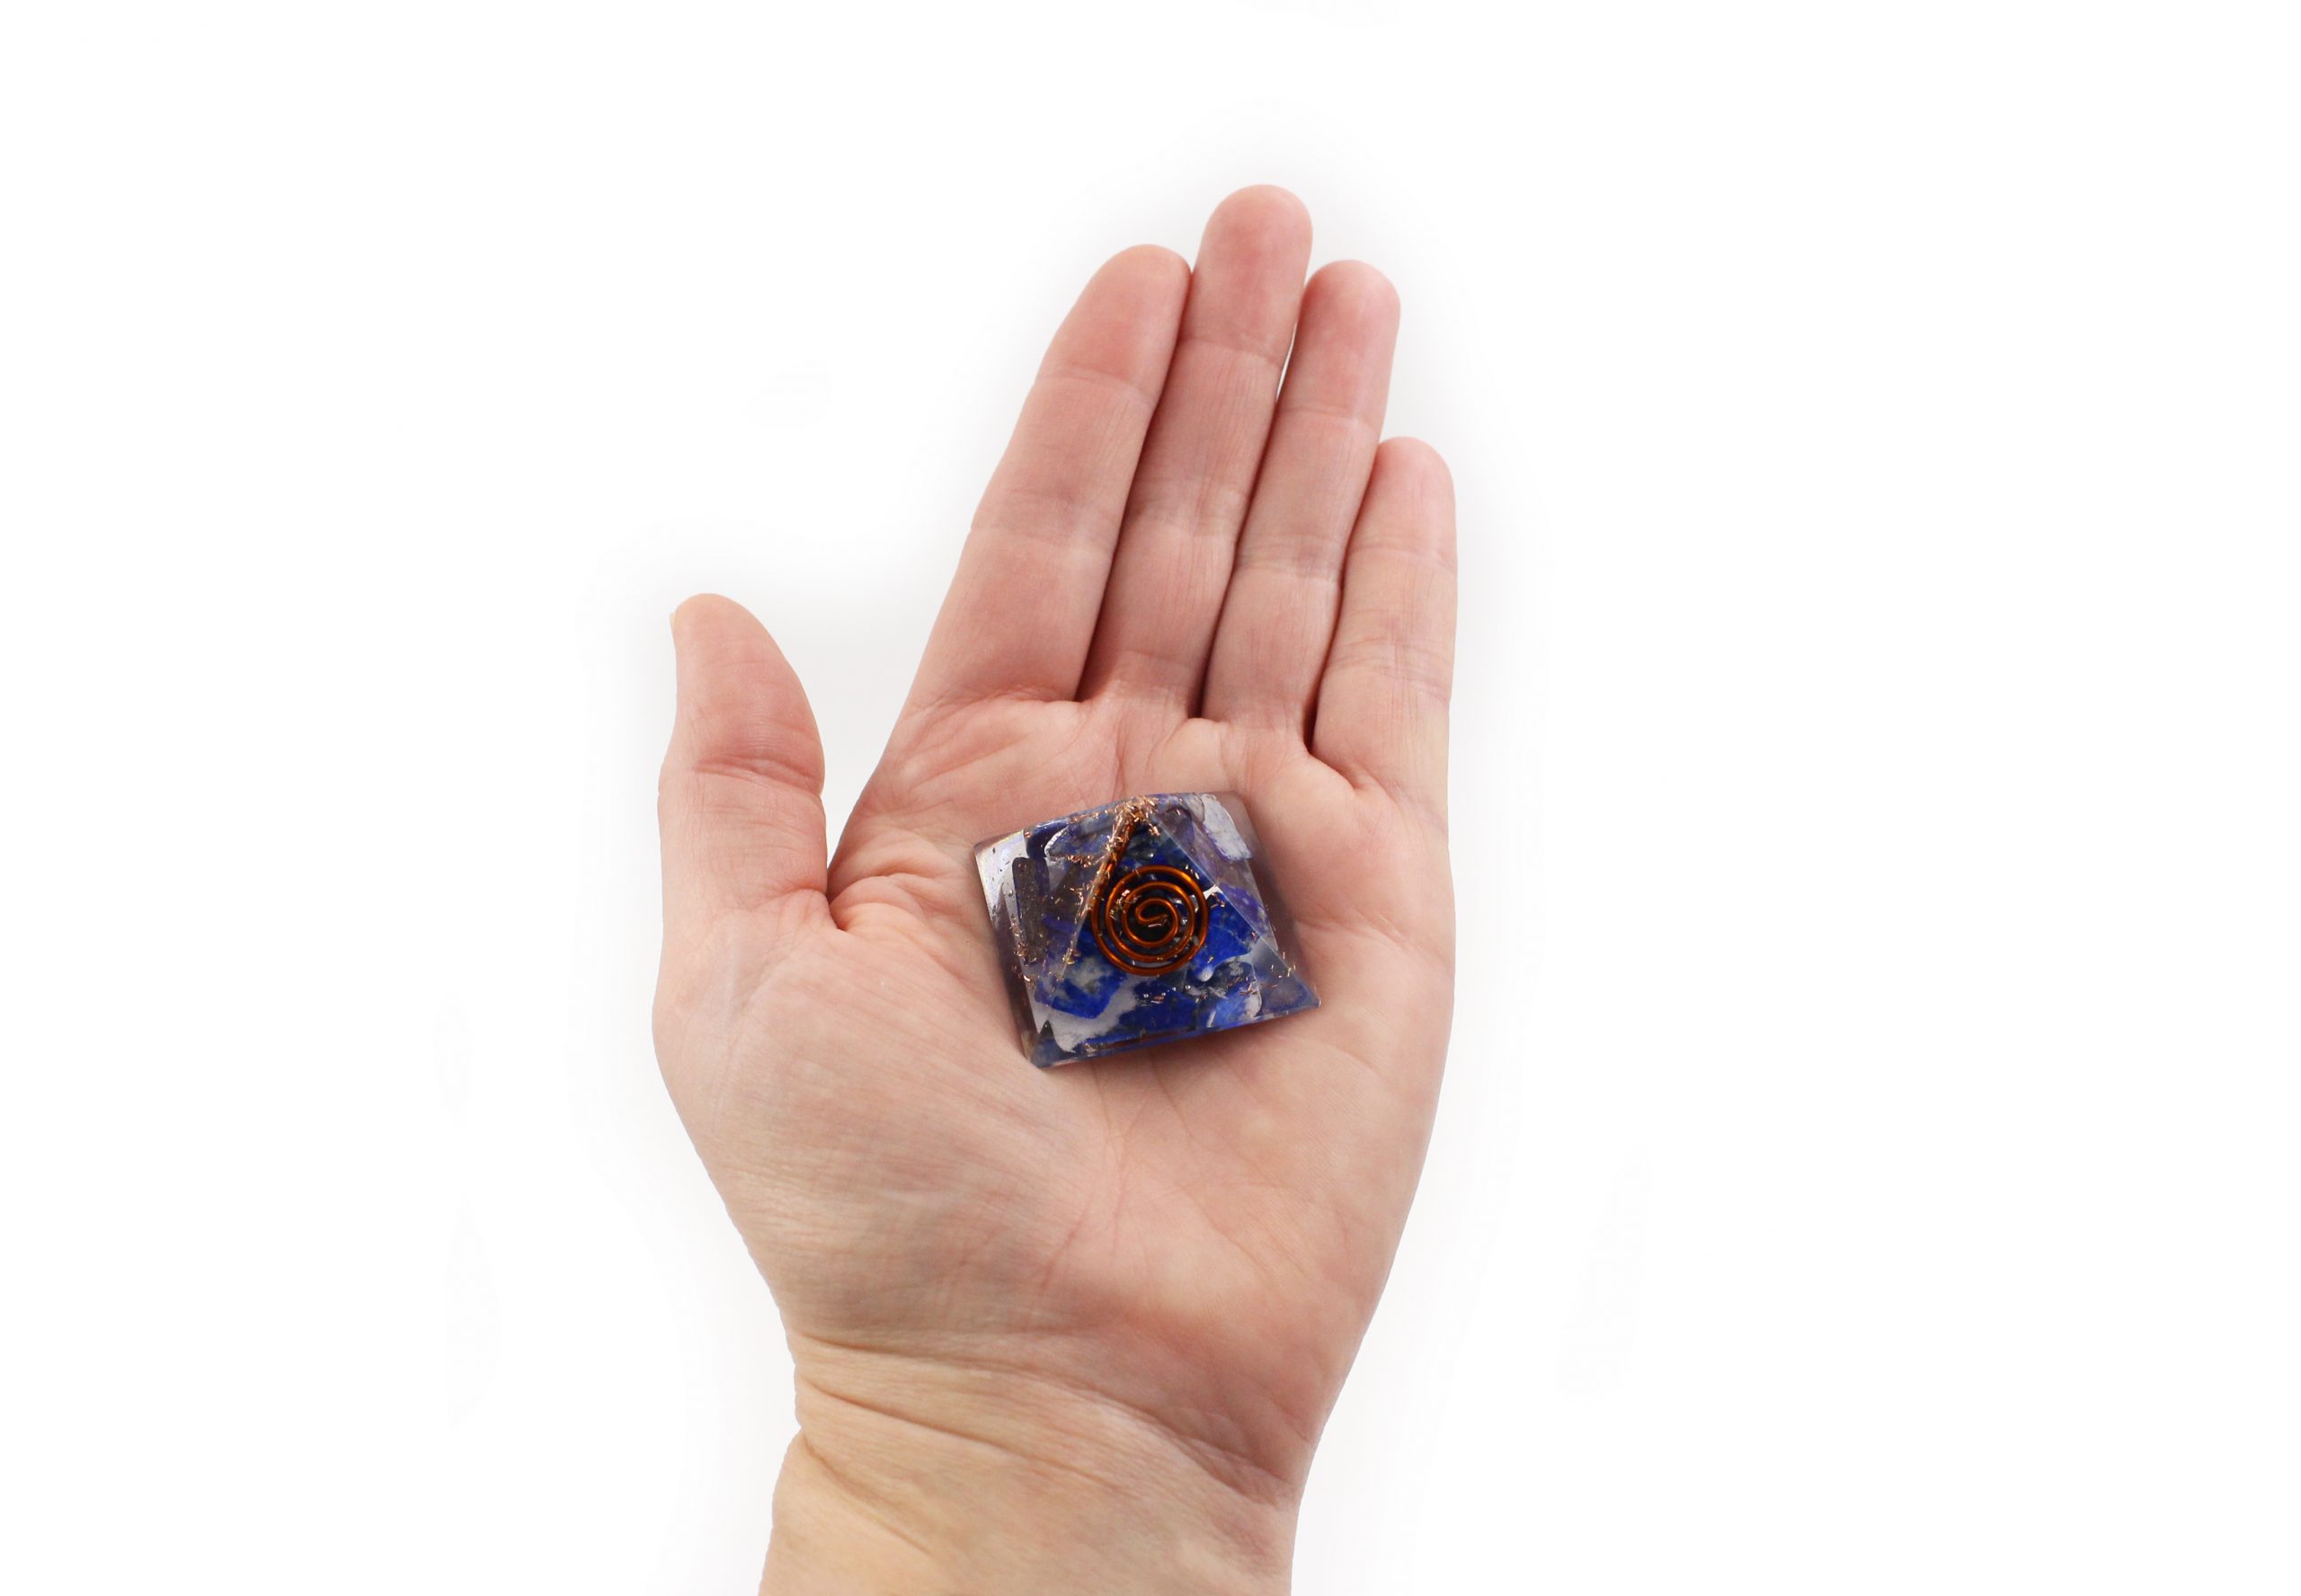 Small Lapis Lazuli Orgonite Pyramid - Crystal Dreams